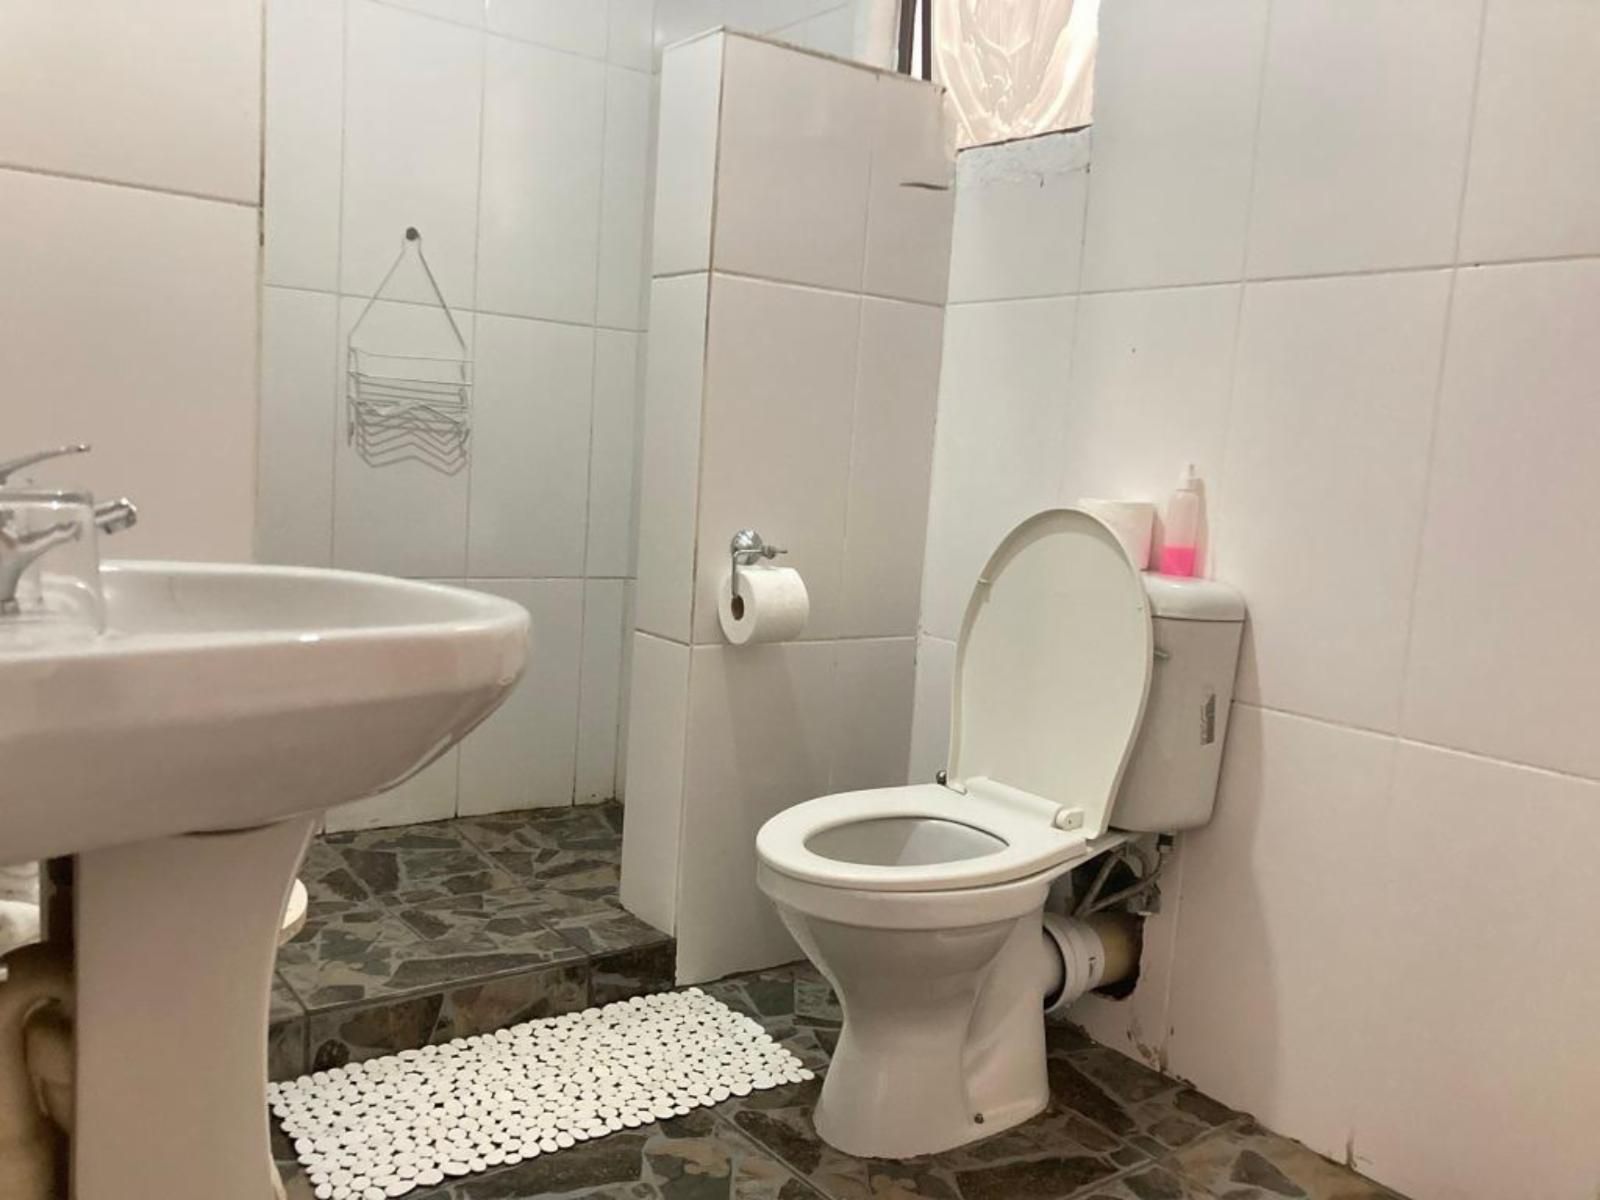 Mihandzu Guest House Hazyview Mpumalanga South Africa Bathroom